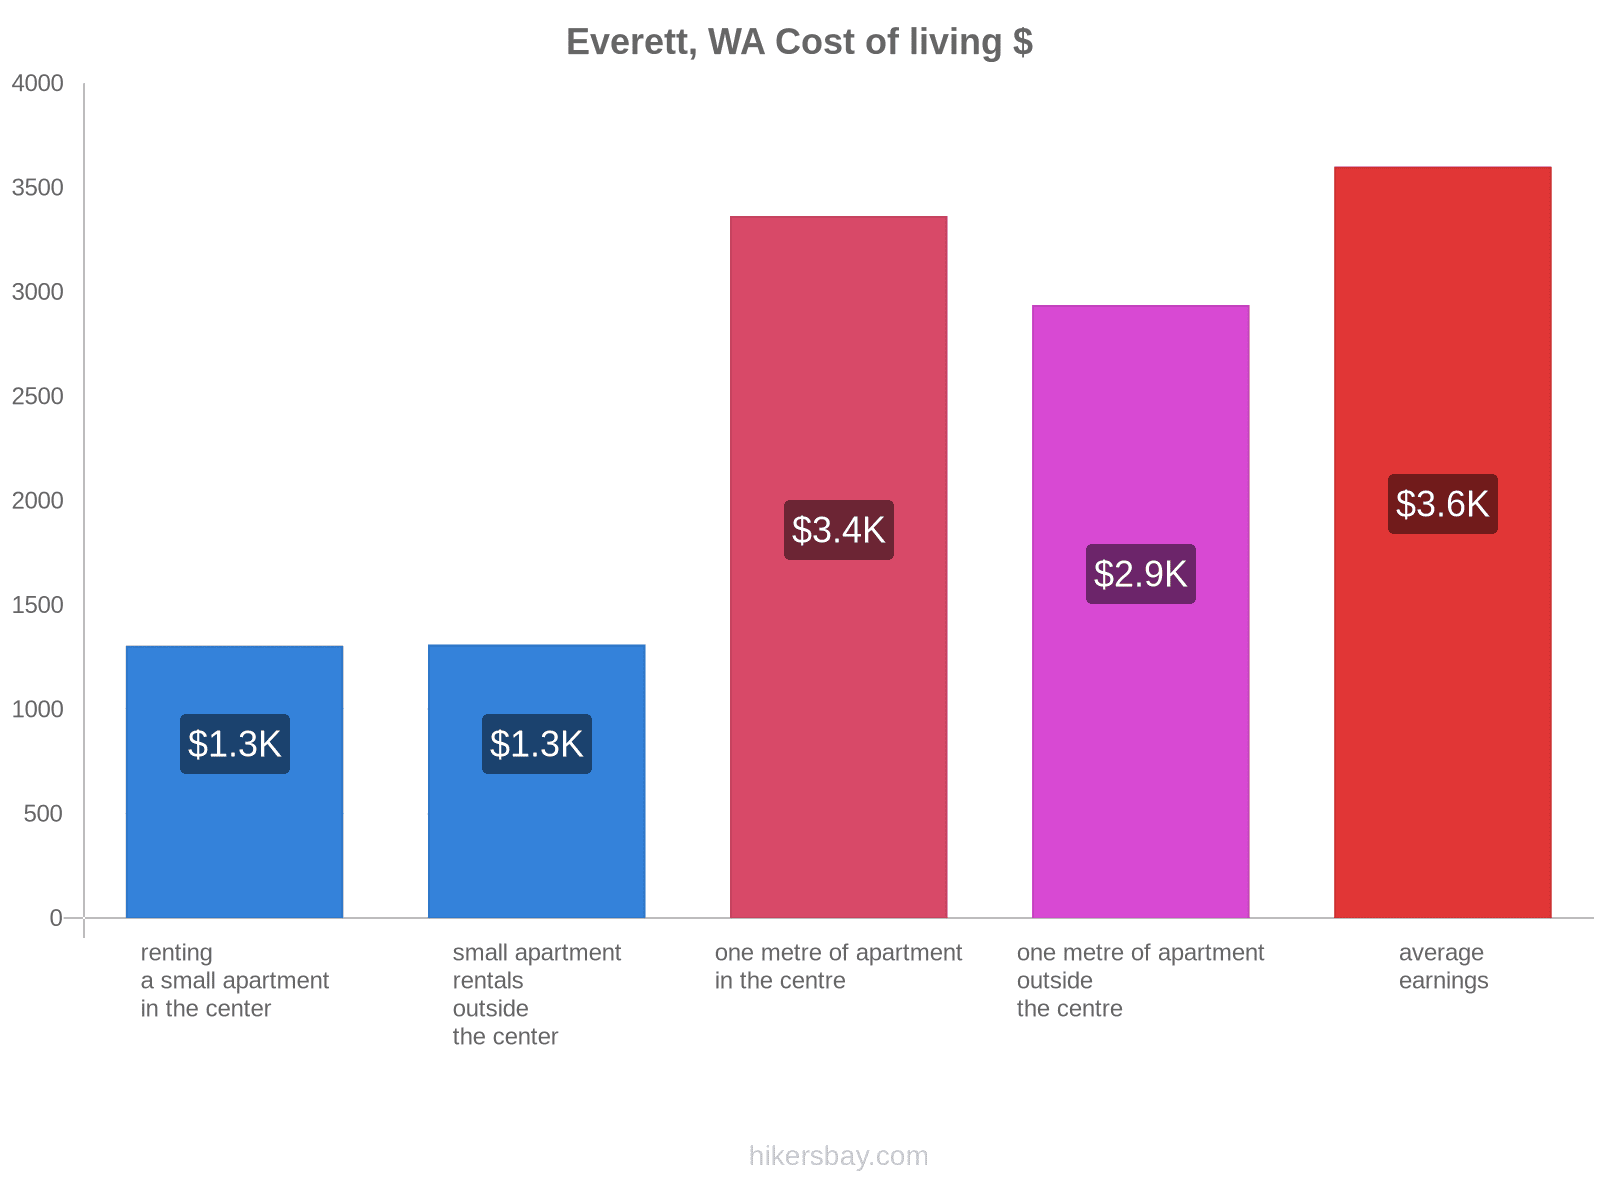 Everett, WA cost of living hikersbay.com